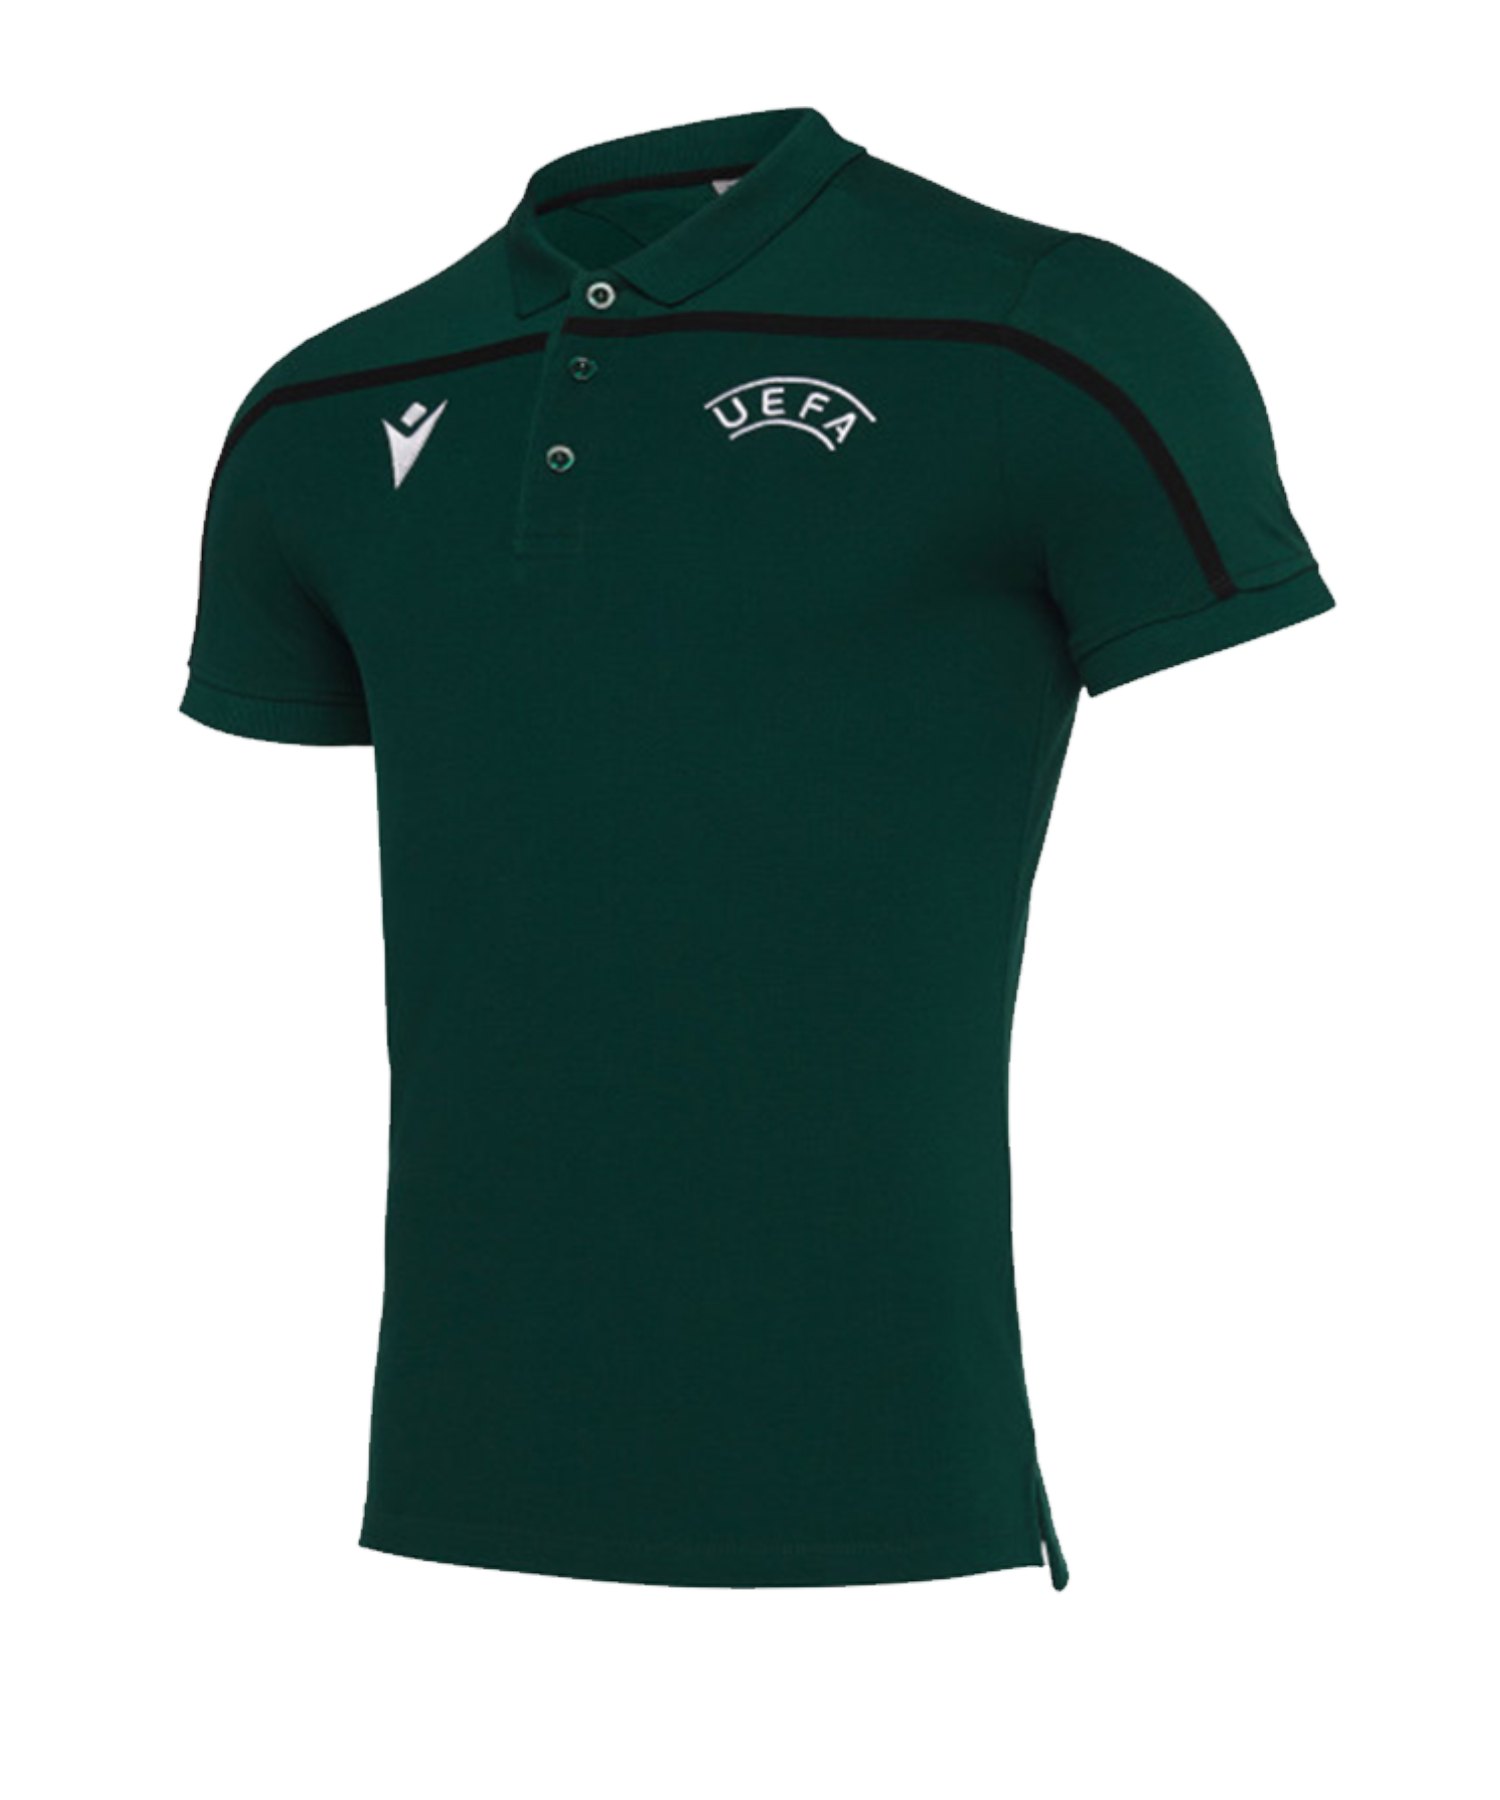 Macron UEFA Offizielles Polo T-Shirt Grün - gruen